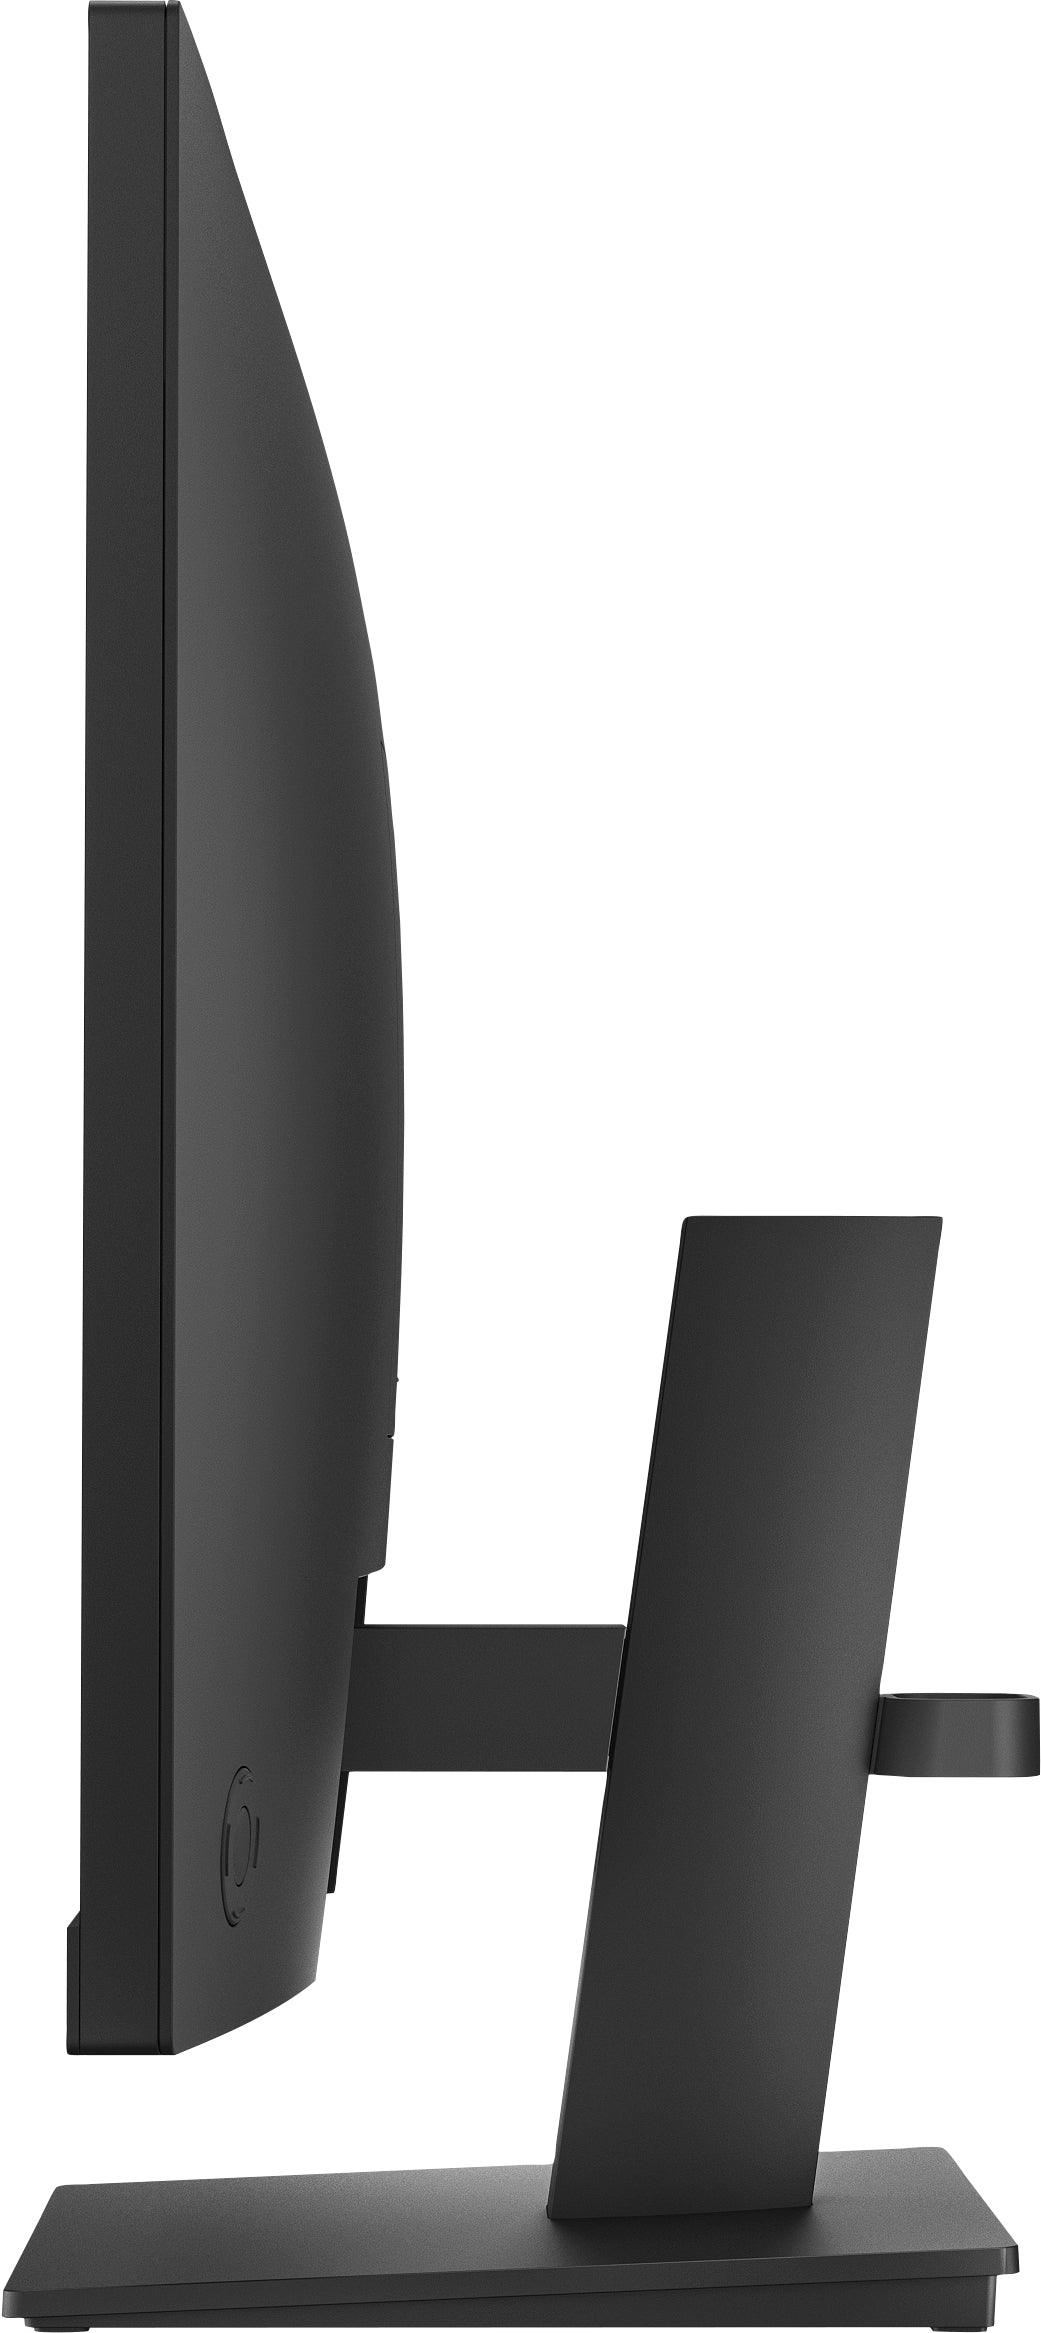 HP P24h G5 computer monitor (23.8") Full HD LCD Black HP